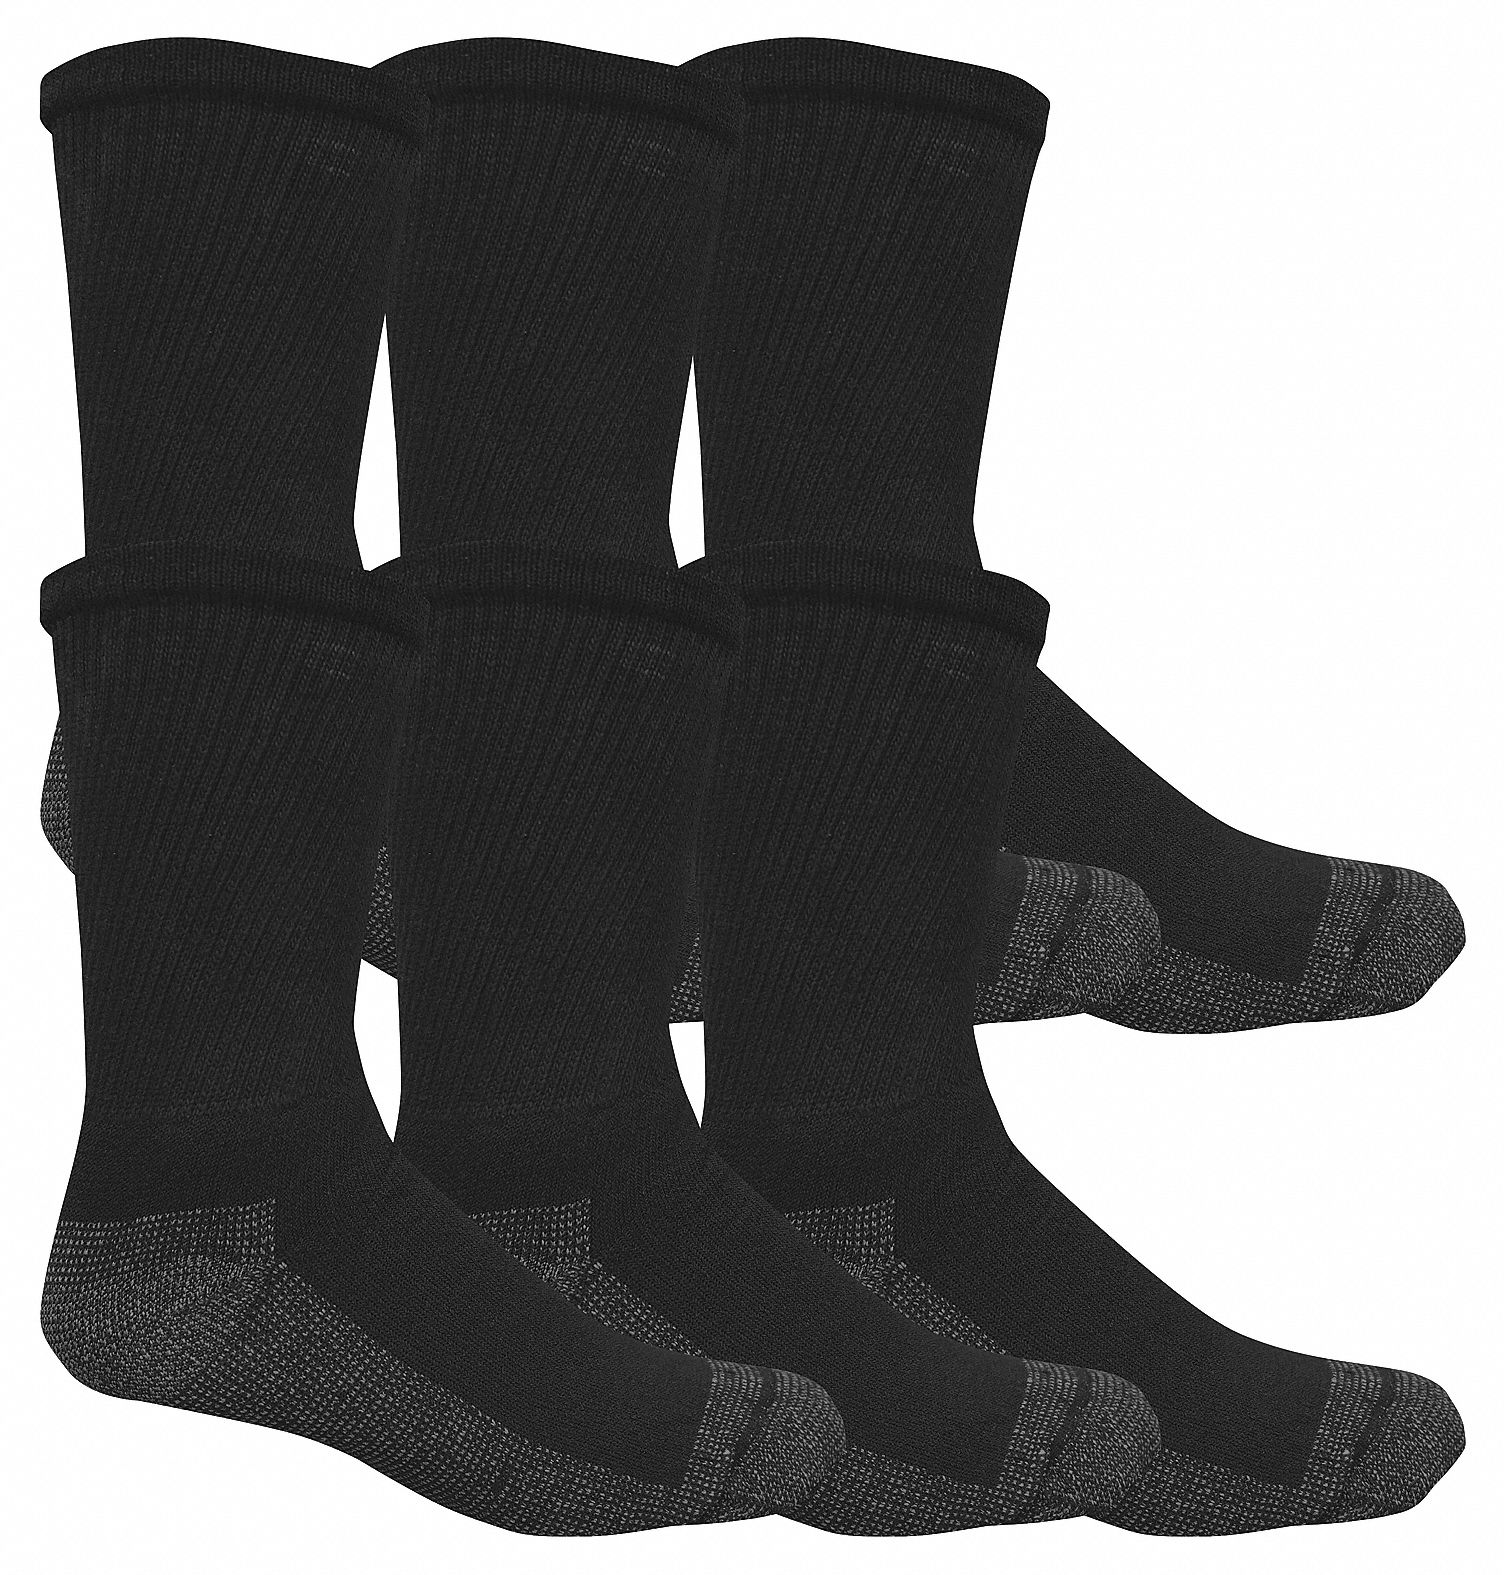 Socks: Crew, Men's, 6 to 12 Fits Shoe Size, Black, Cotton, FRUIT OF THE LOOM, Seamless Design, 6 PK